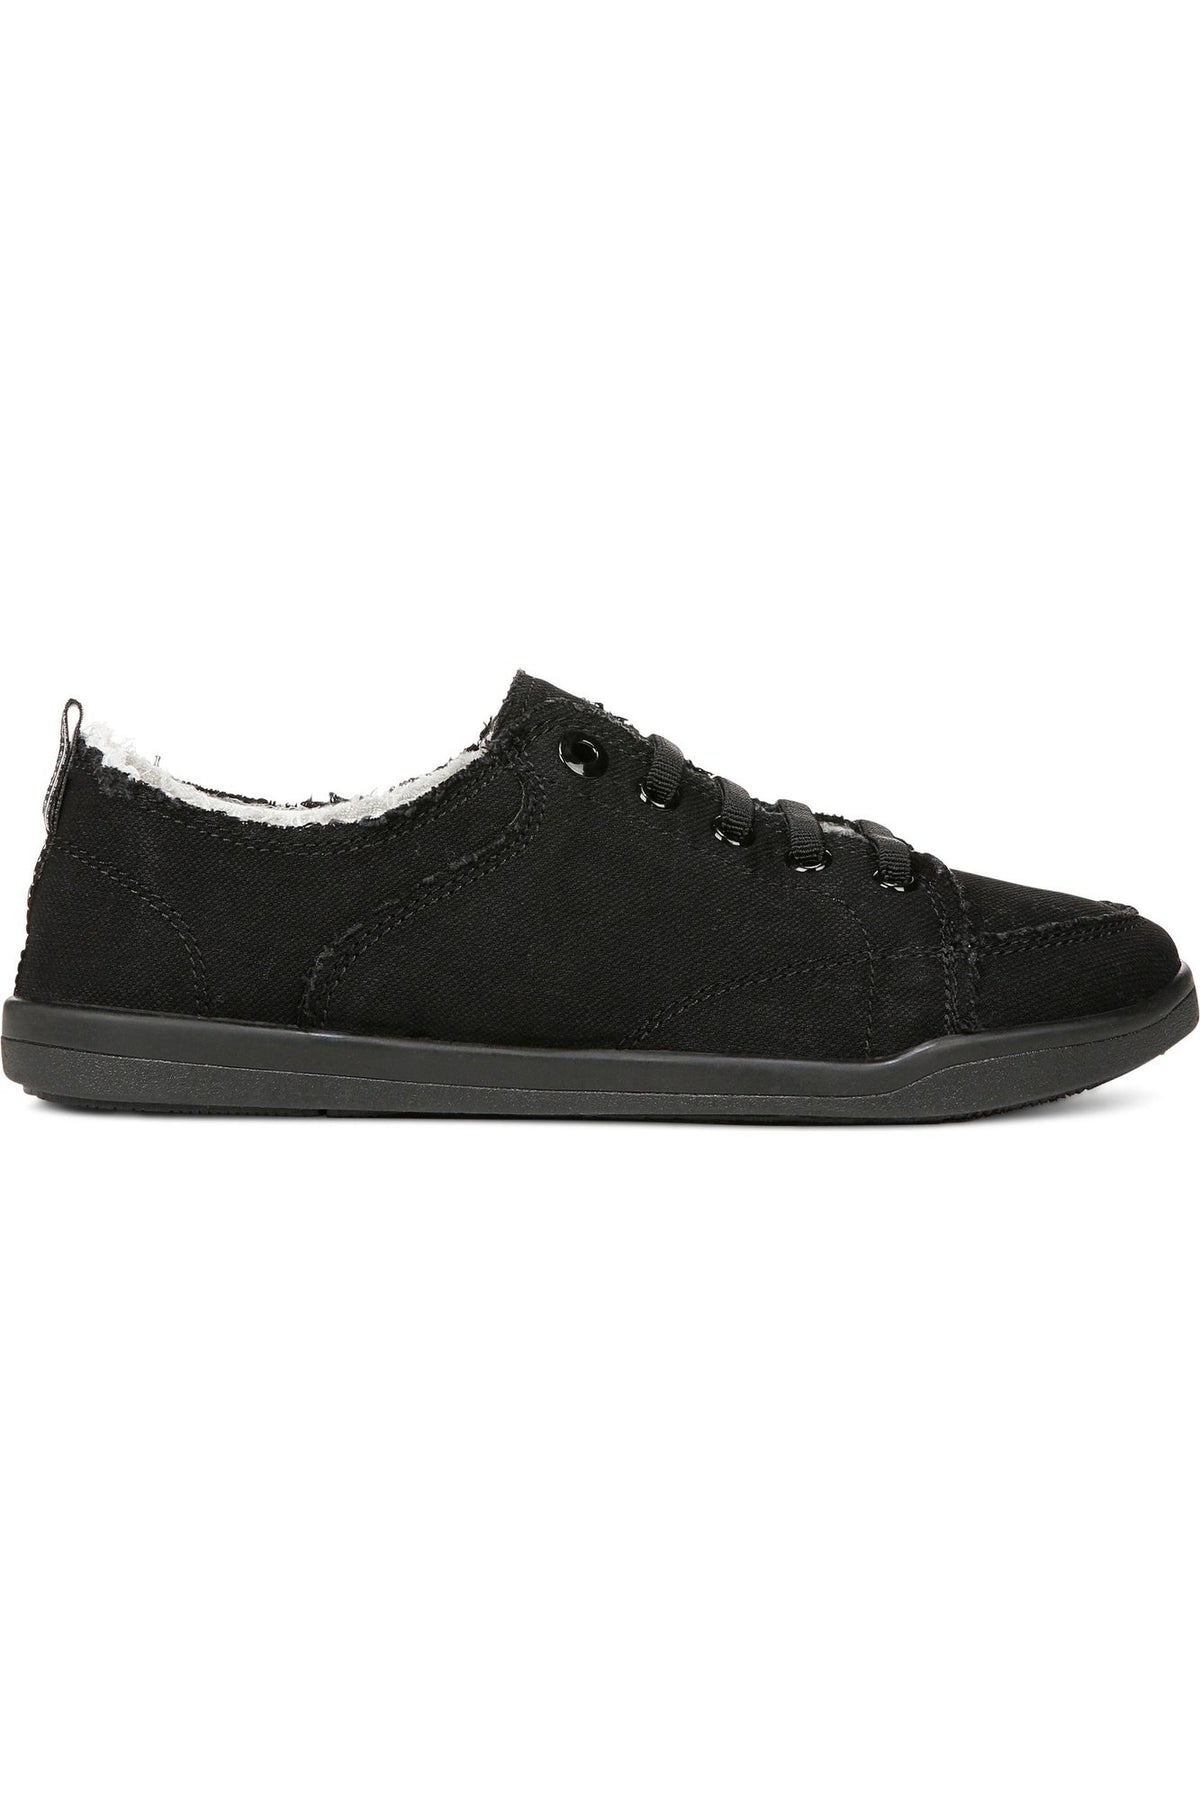 Vionic Canvas Laced Denim Sneaker - Style Pismo CNVS, black denim, side